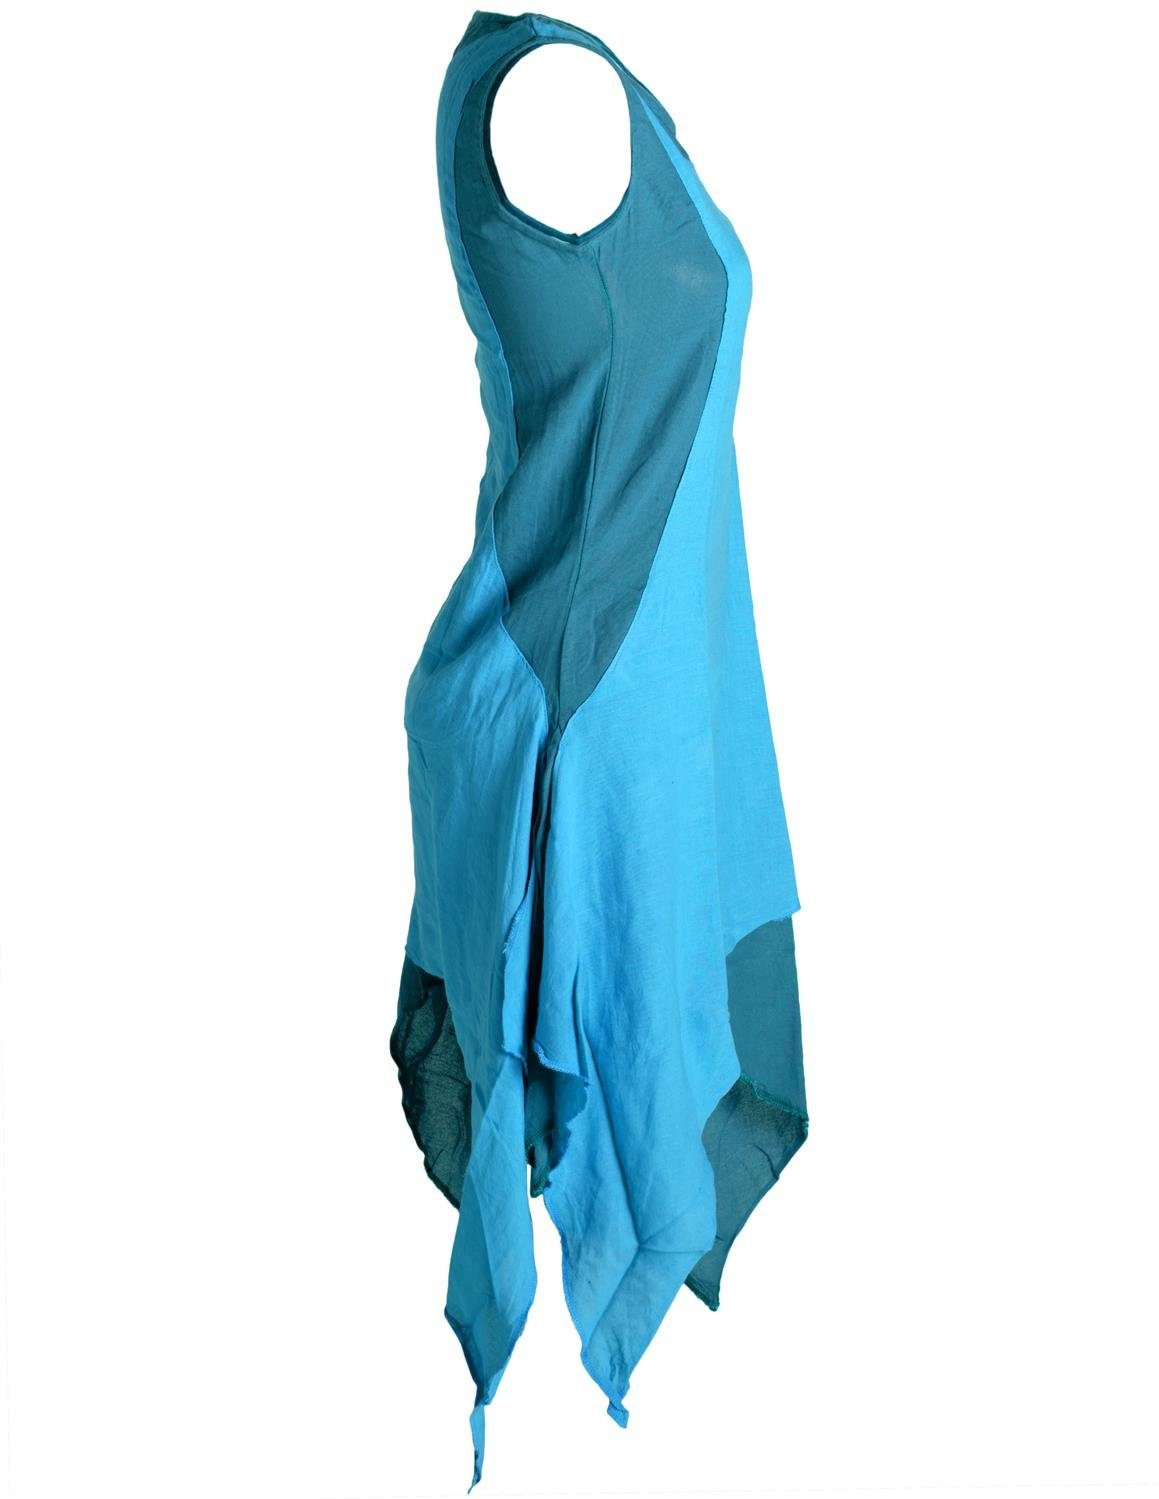 Style Kleid Boho, Ärmelloses Lagenlook Goa, Vishes Sommerkleid türkis Baumwolle Hippie handgewebte